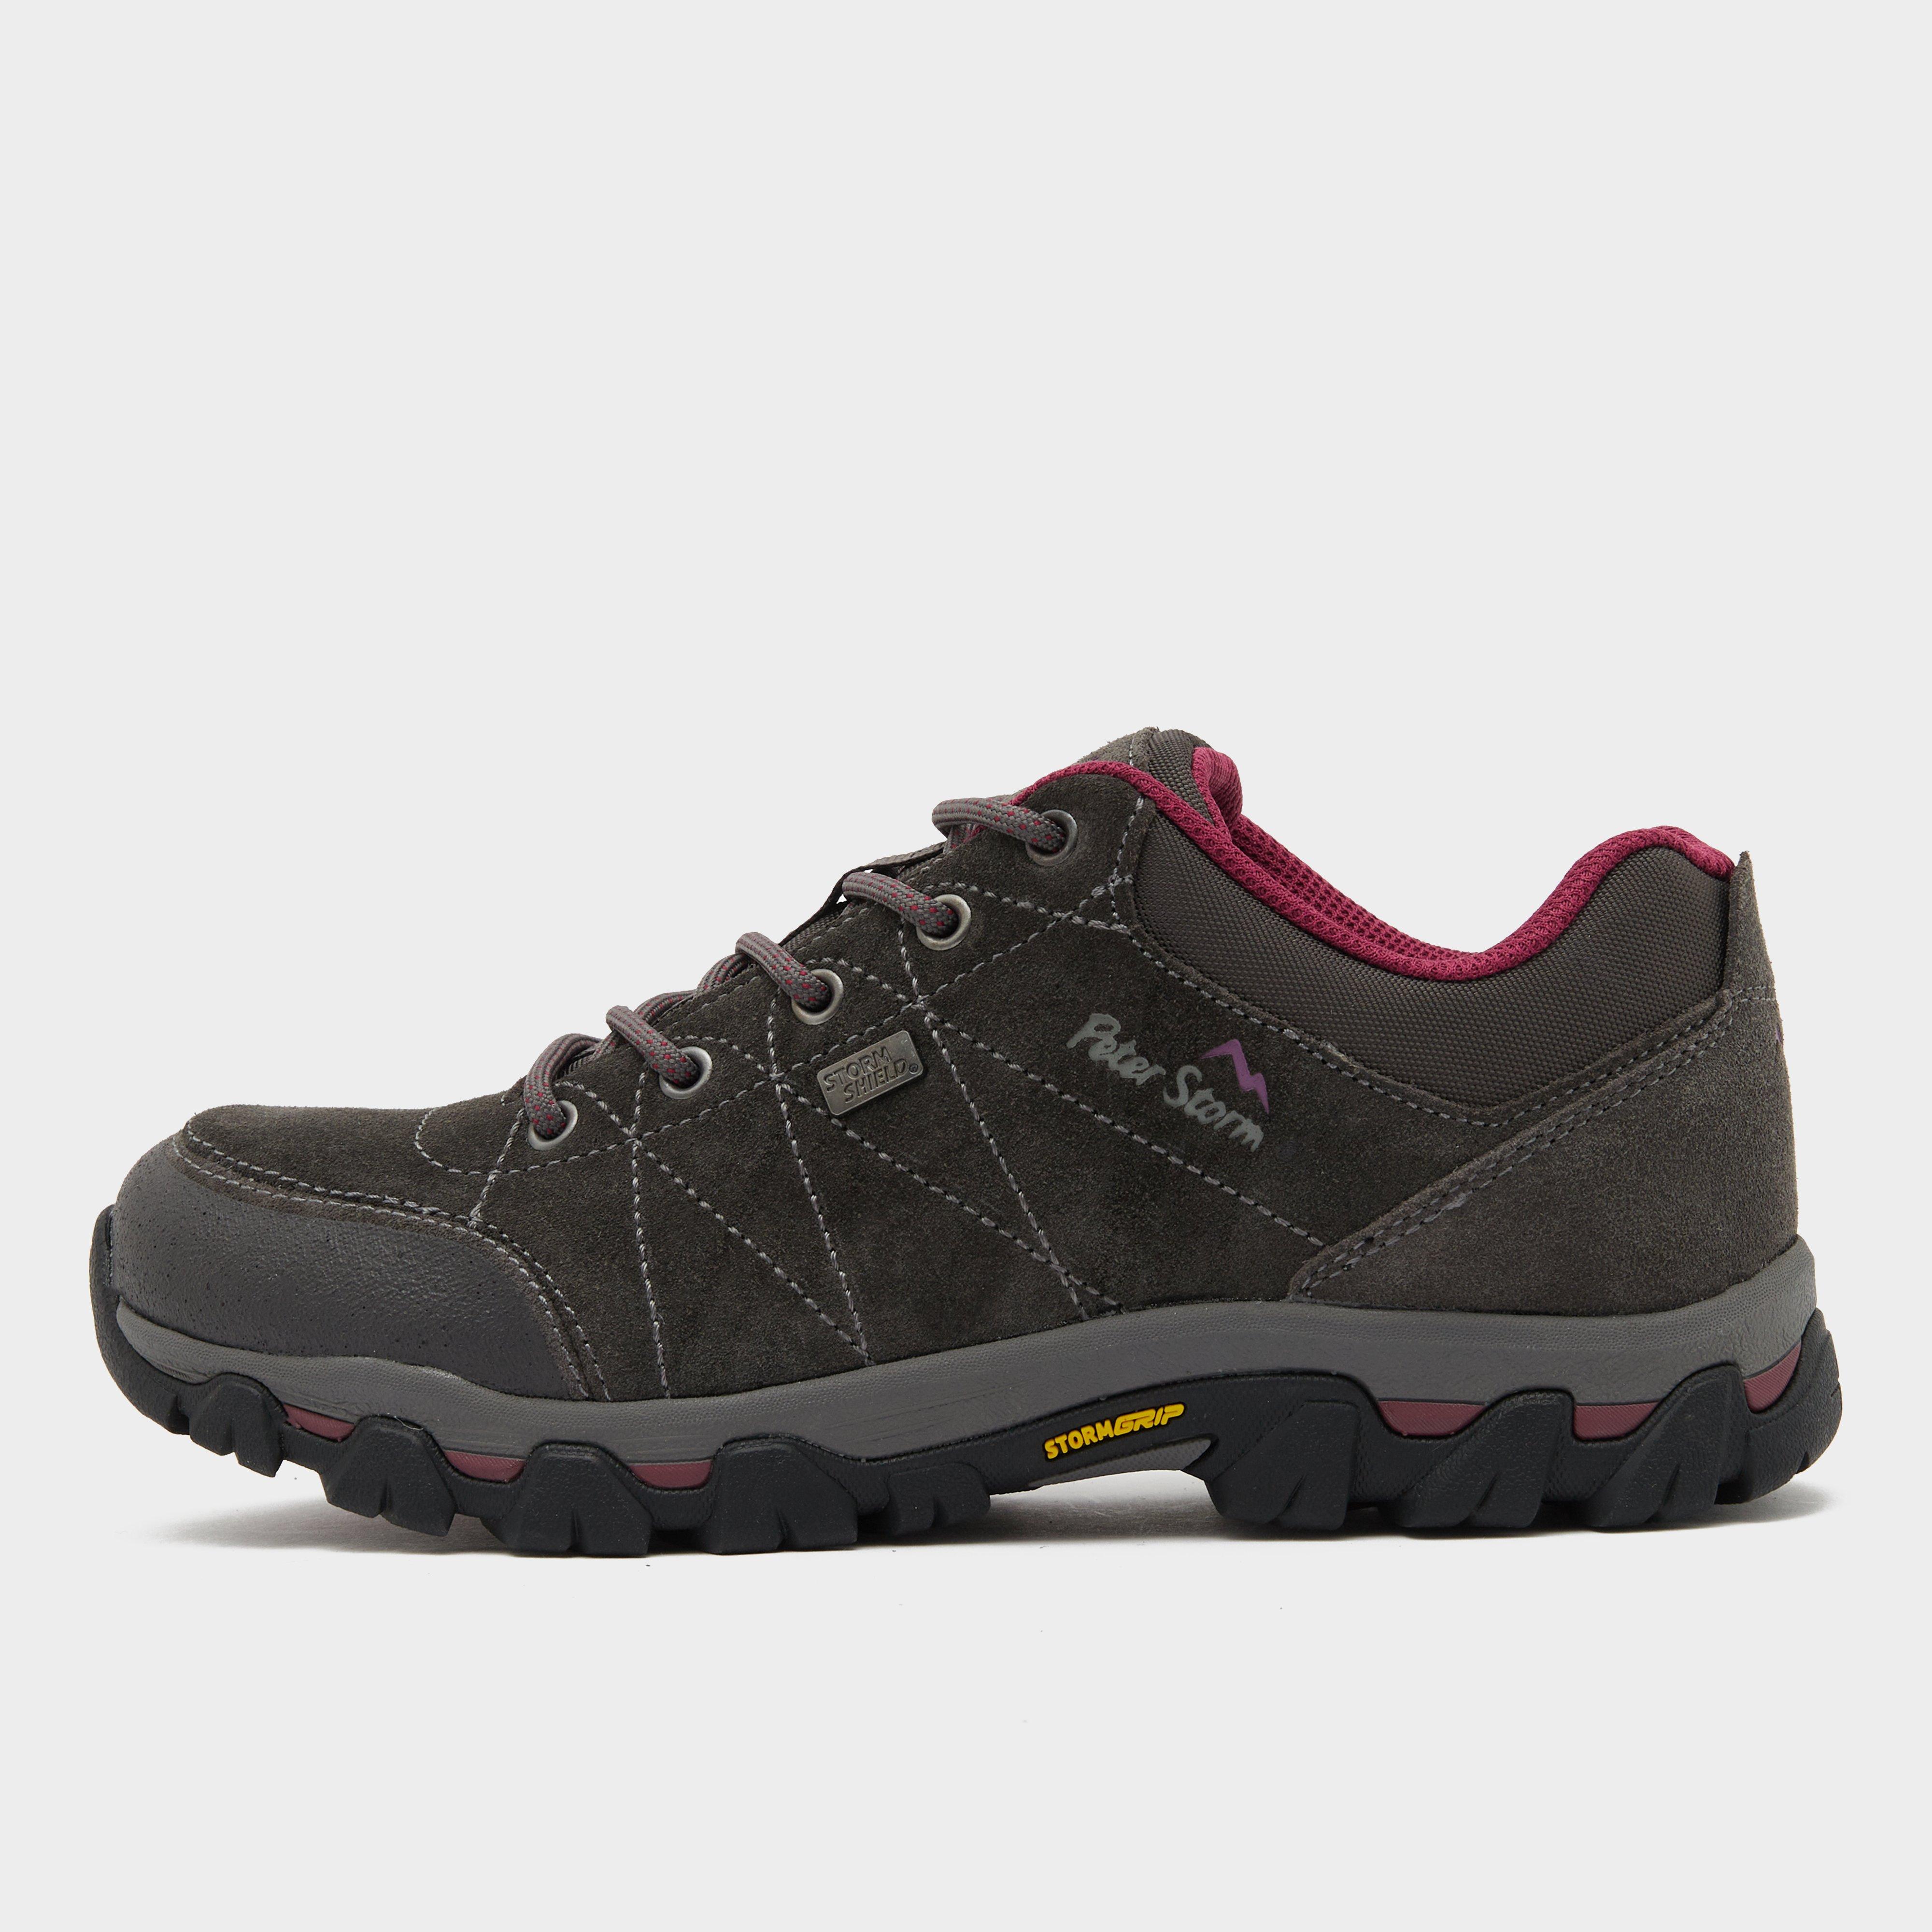 Photos - Trekking Shoes Peter Storm Women's Silverdale II Waterproof Walking Shoes, Dark Grey 